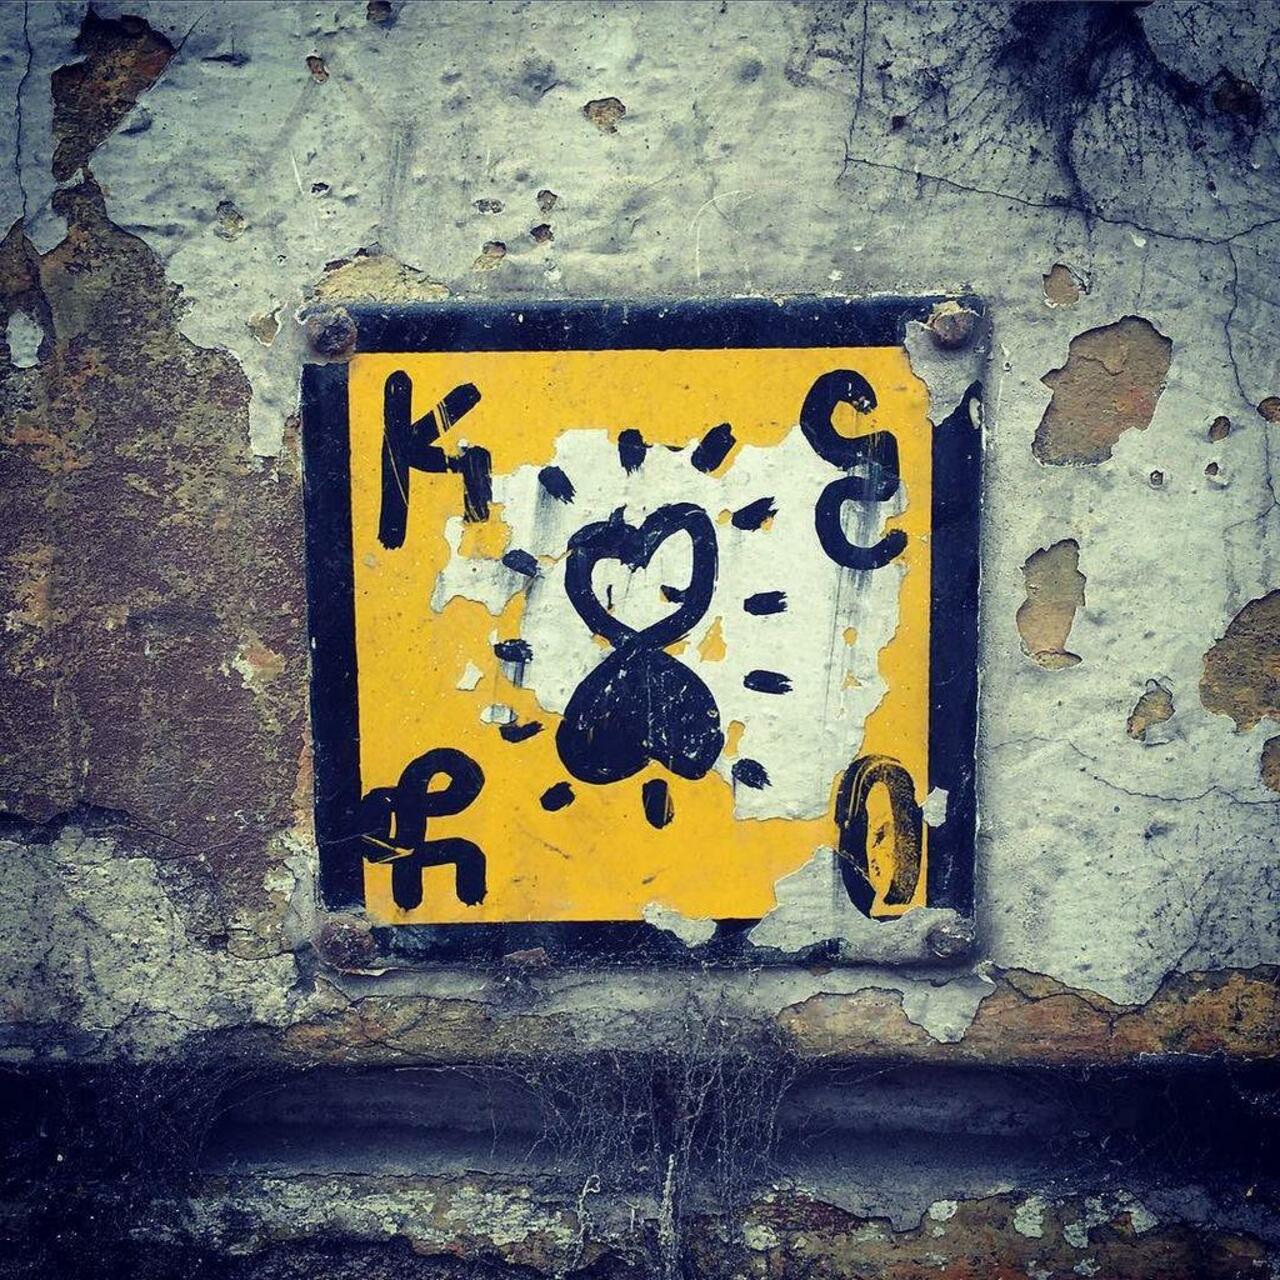 RT @artpushr: via #louisetedeschi "http://bit.ly/1OpIvmm" #graffiti #streetart http://t.co/QbNdIYPpKS